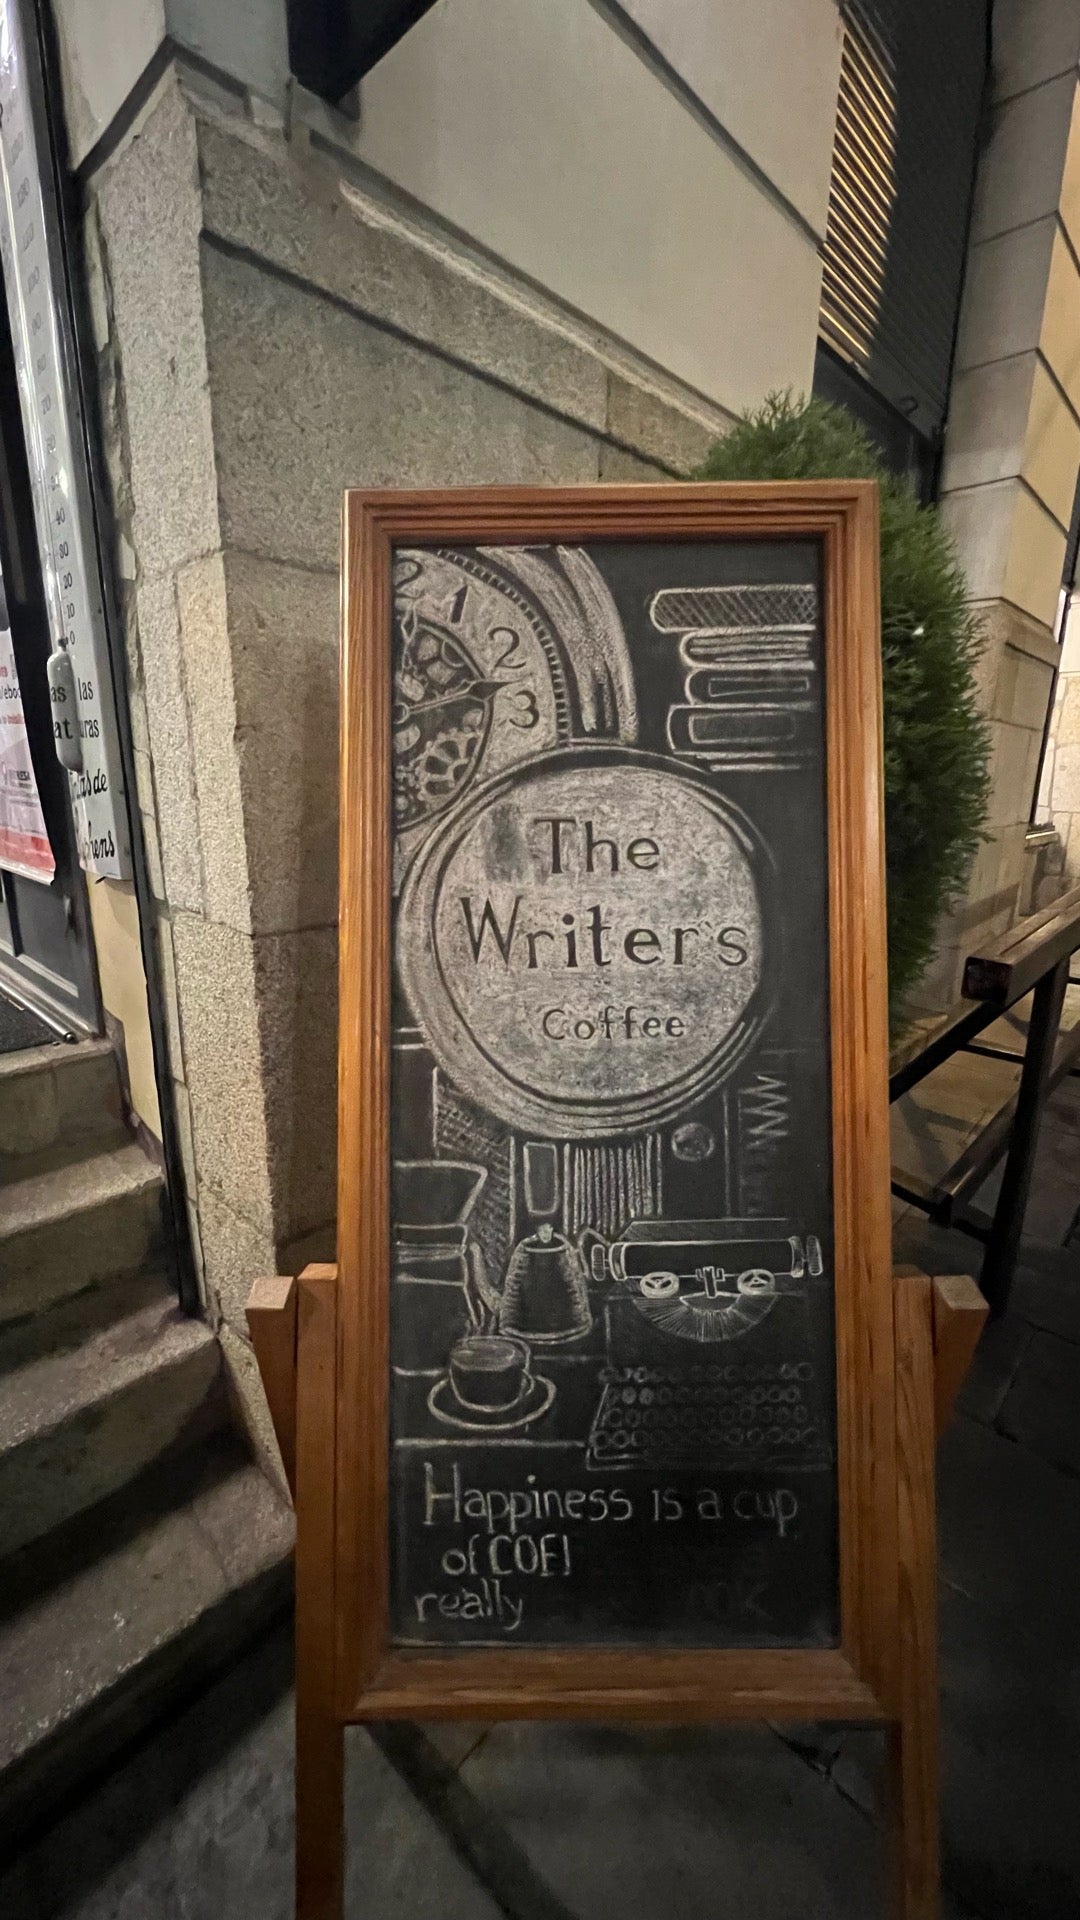 The Writer's Coffee